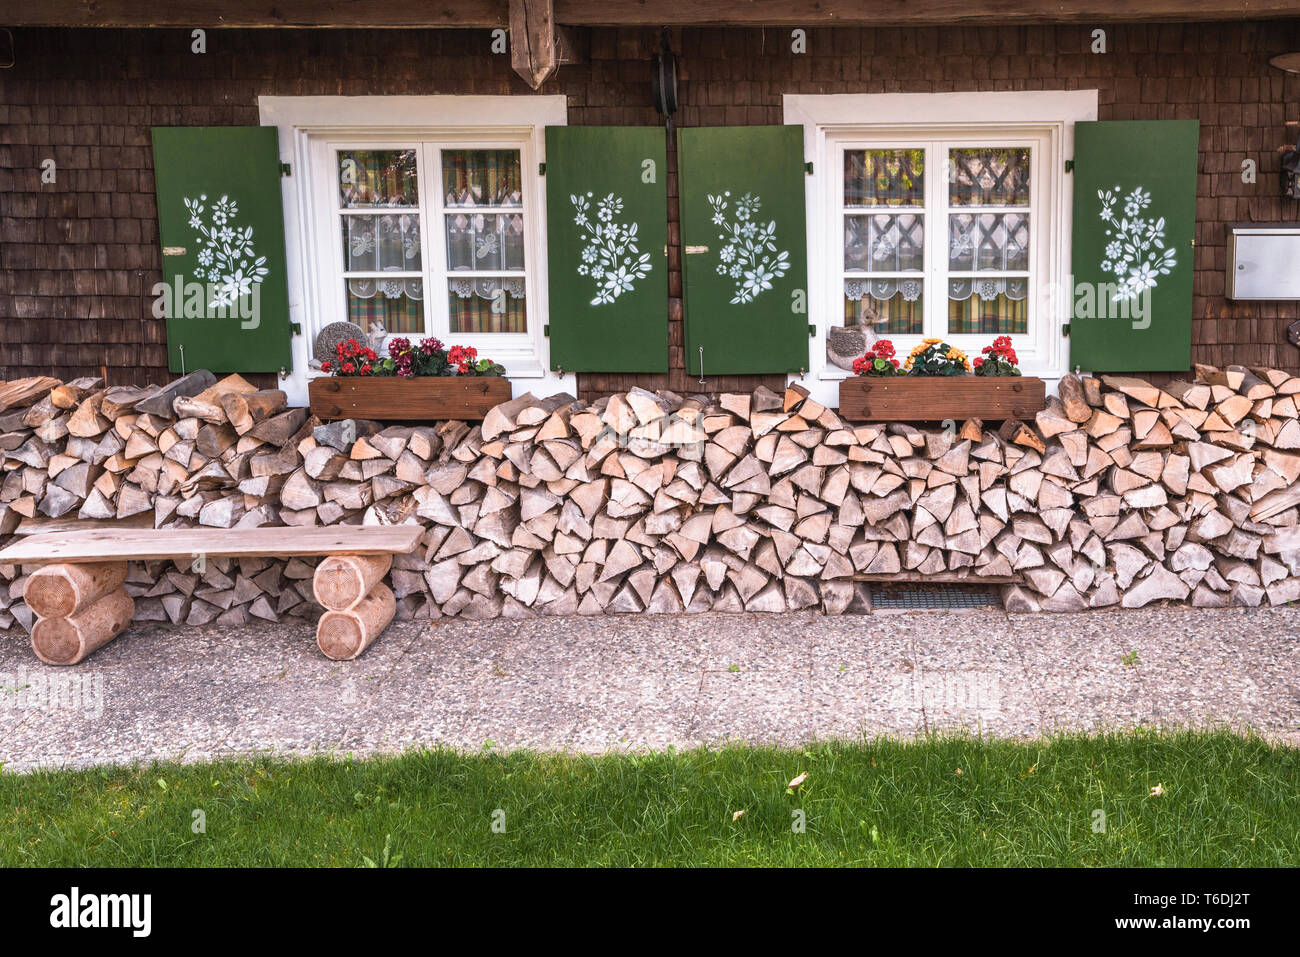 Countryhouse estilo de la Selva Negra, aldea Menzenschwand, Alta Selva Negra, Alemania, municipio San Blasien, distrito de Waldshut Foto de stock